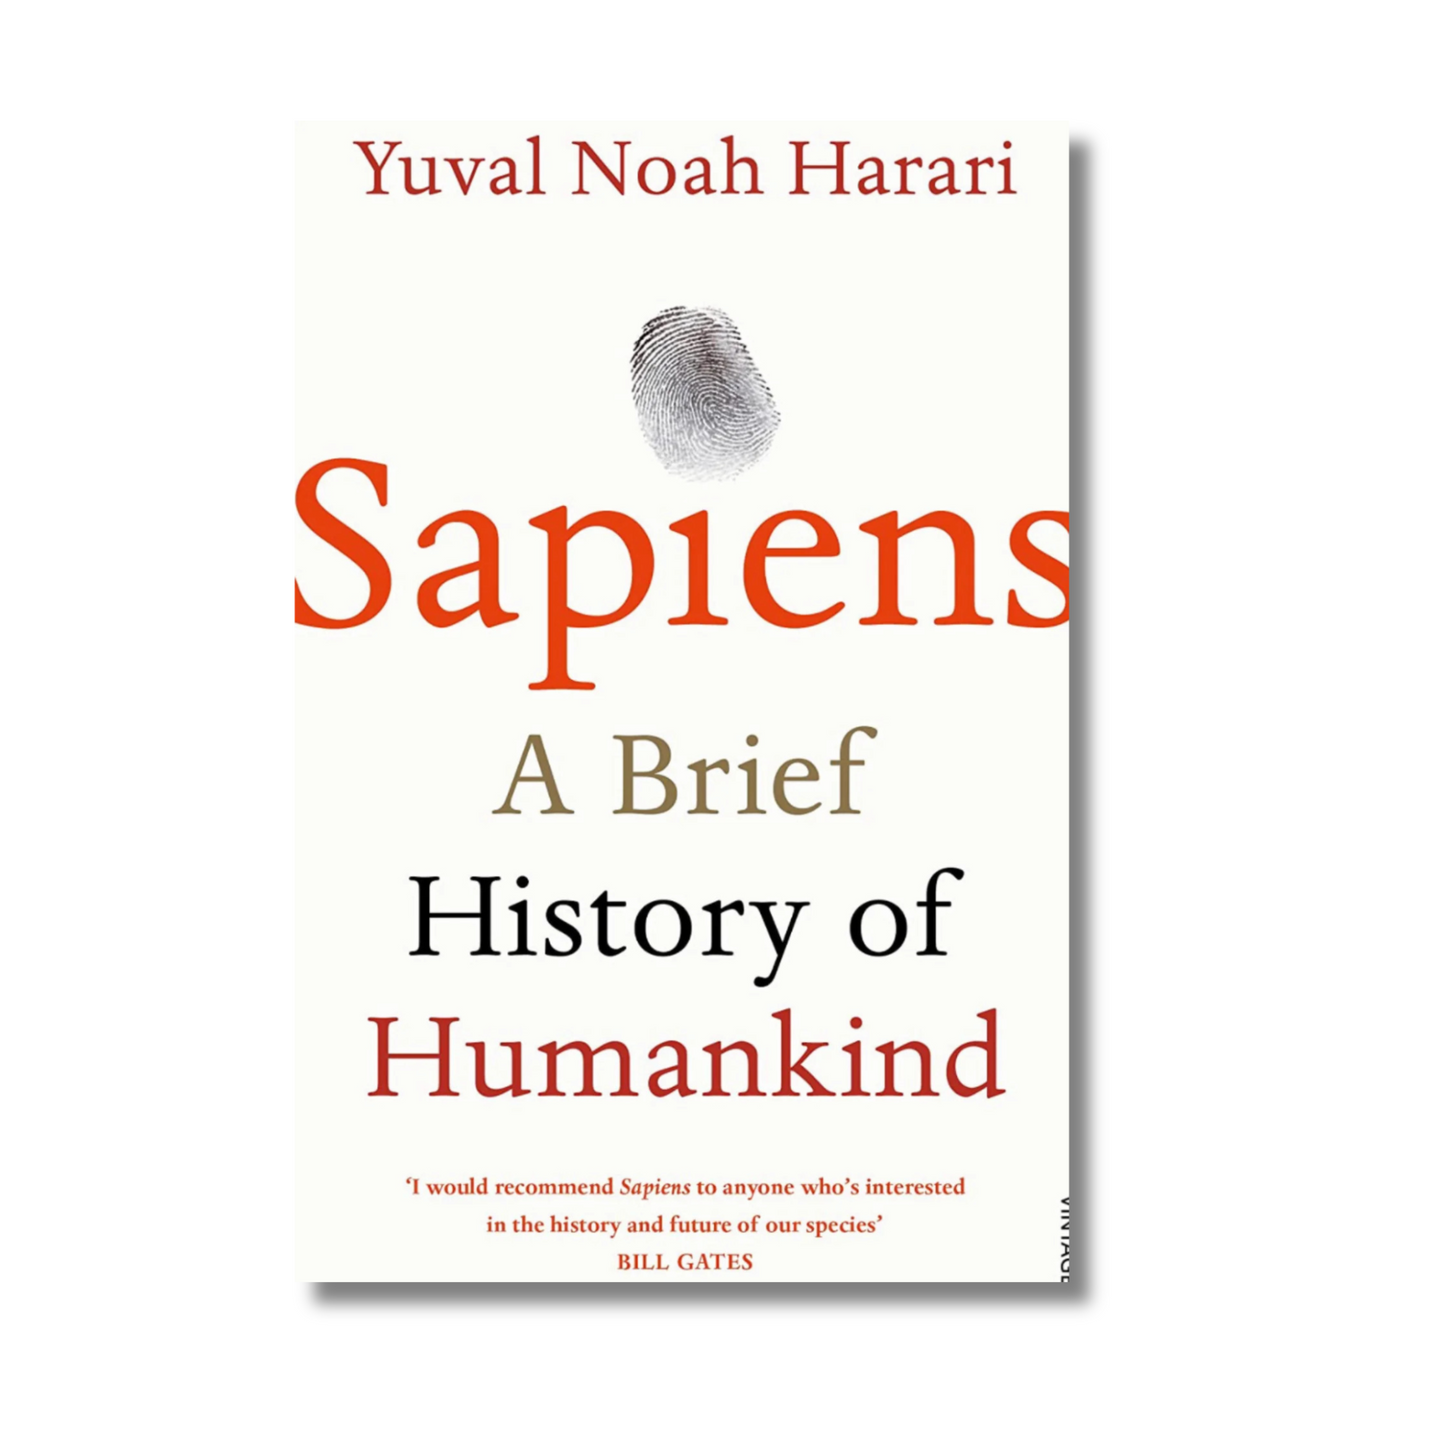 Sapiens: A Brief History of Humankind by Yuval Noah Harari (Paperback)